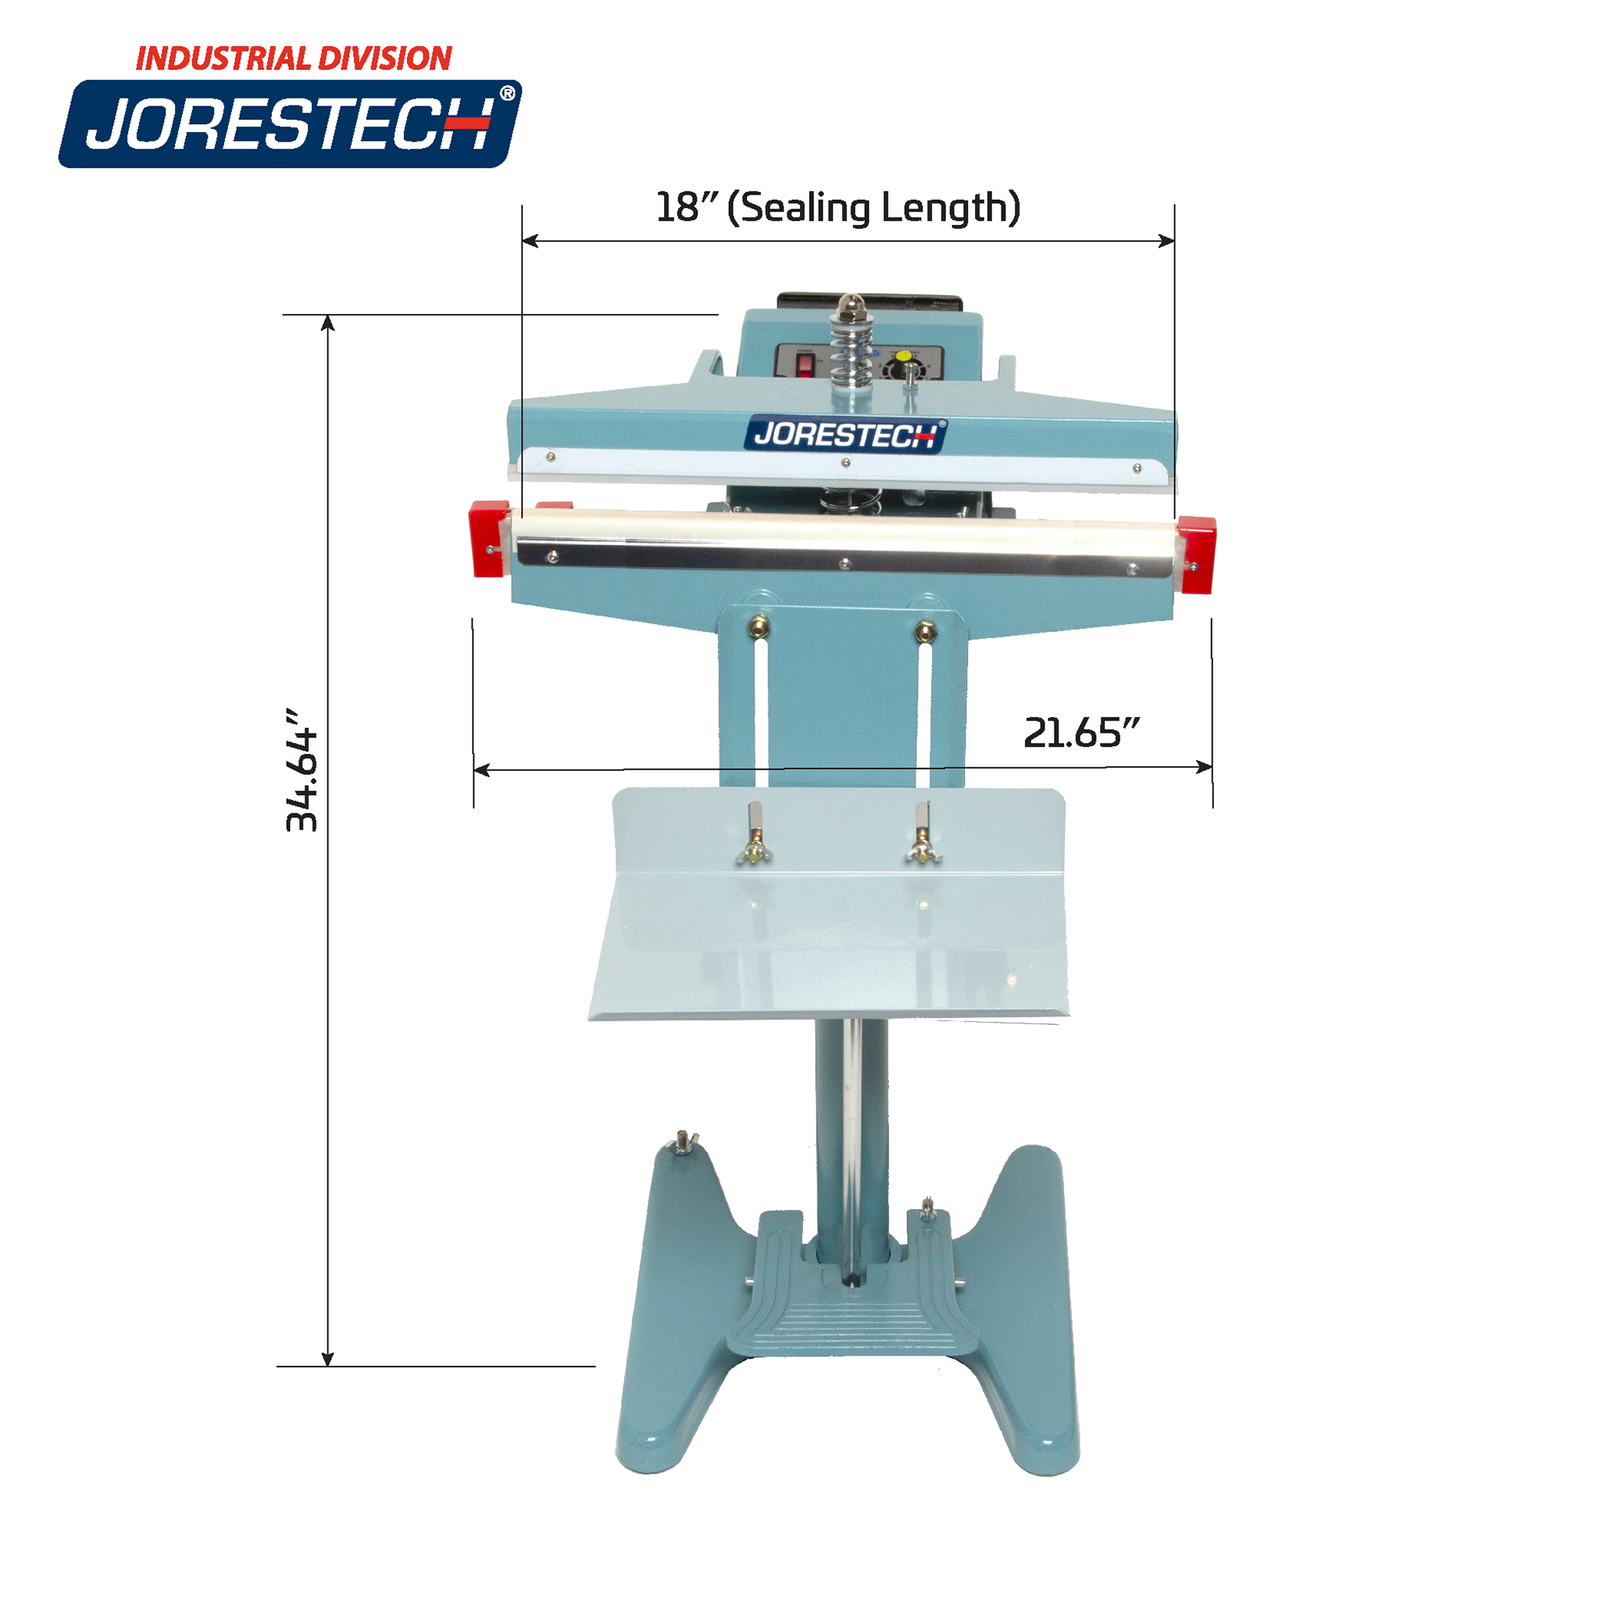 Infographic shows blue JORES TECHNOLOGIES® foot impulse sealer with machine measurements. Machine measurements are 21.65